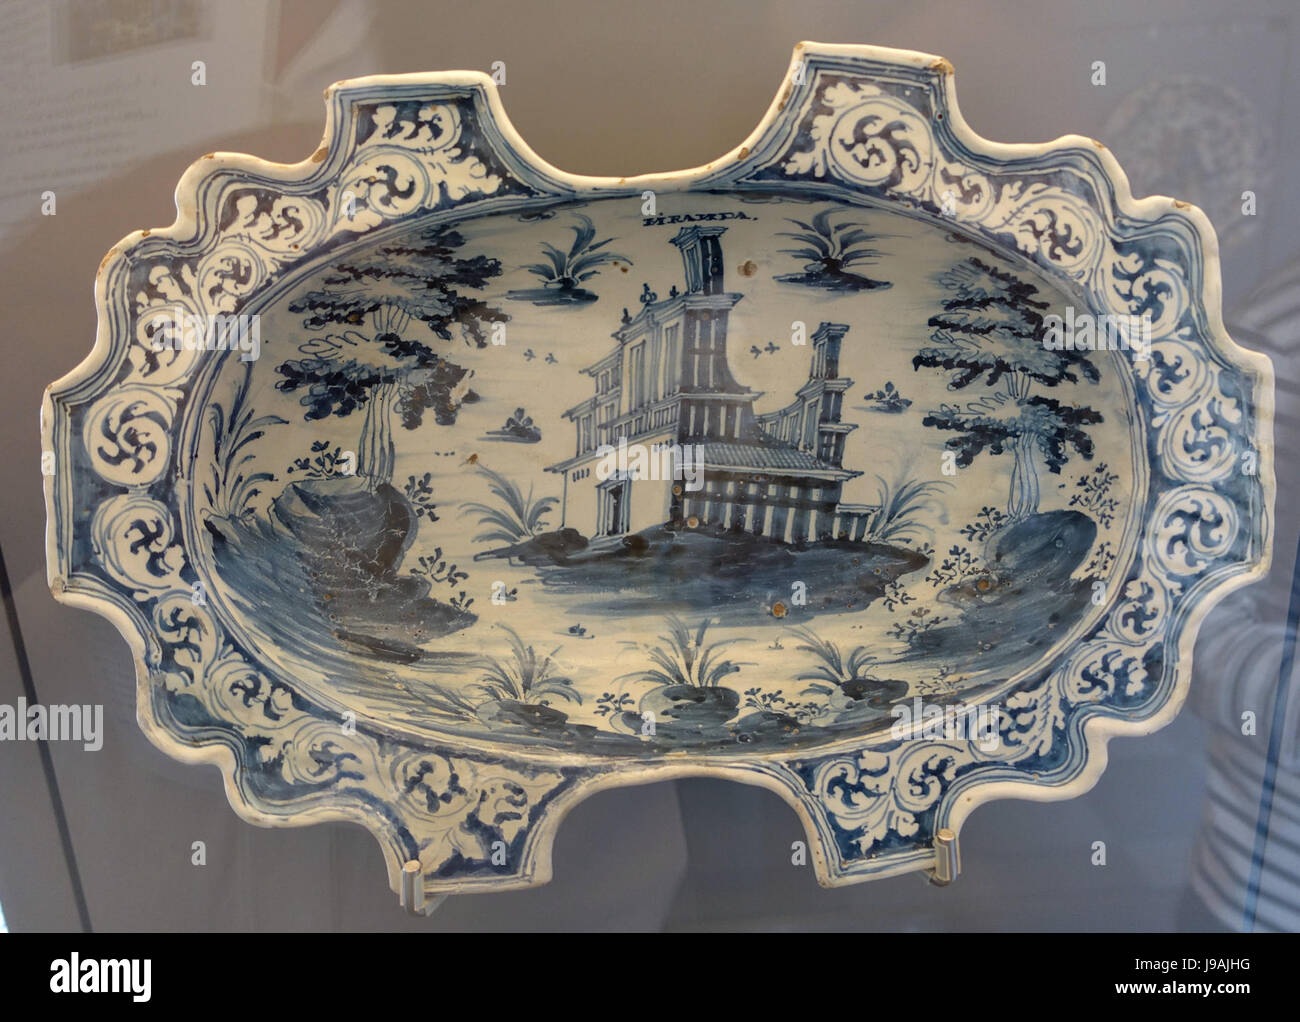 Talavera oval platter with rocaille waved rim, ceramic and oriental architecture   Museo Nacional de Artes Decorativas   Madrid, Spain   DSC08098 Stock Photo